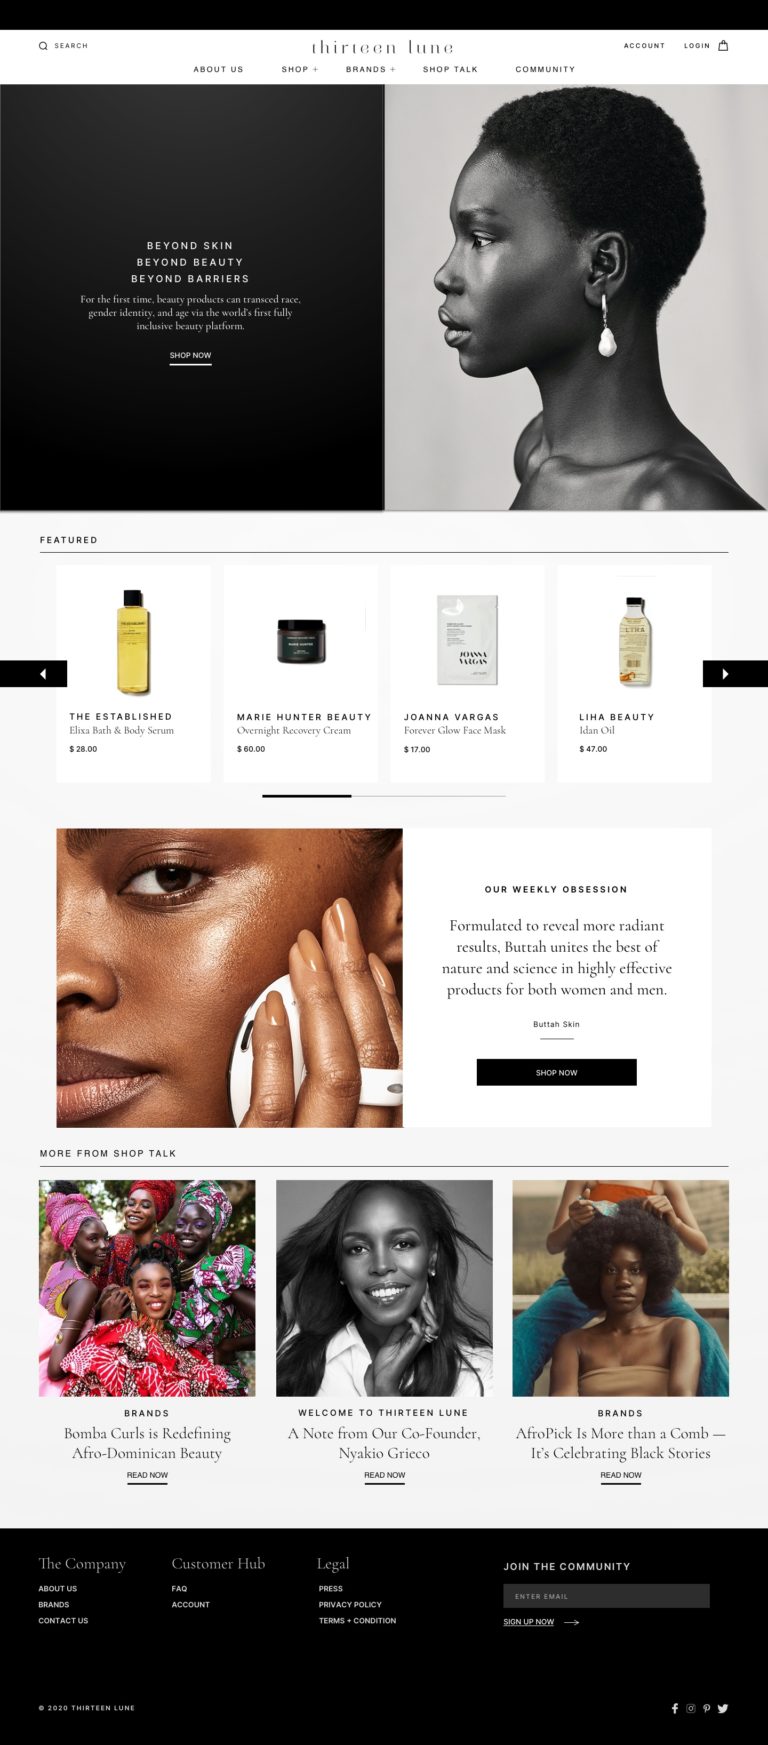 Thirteen Lune Offers Minority-Owned Beauty Brands a Digital Marketplace